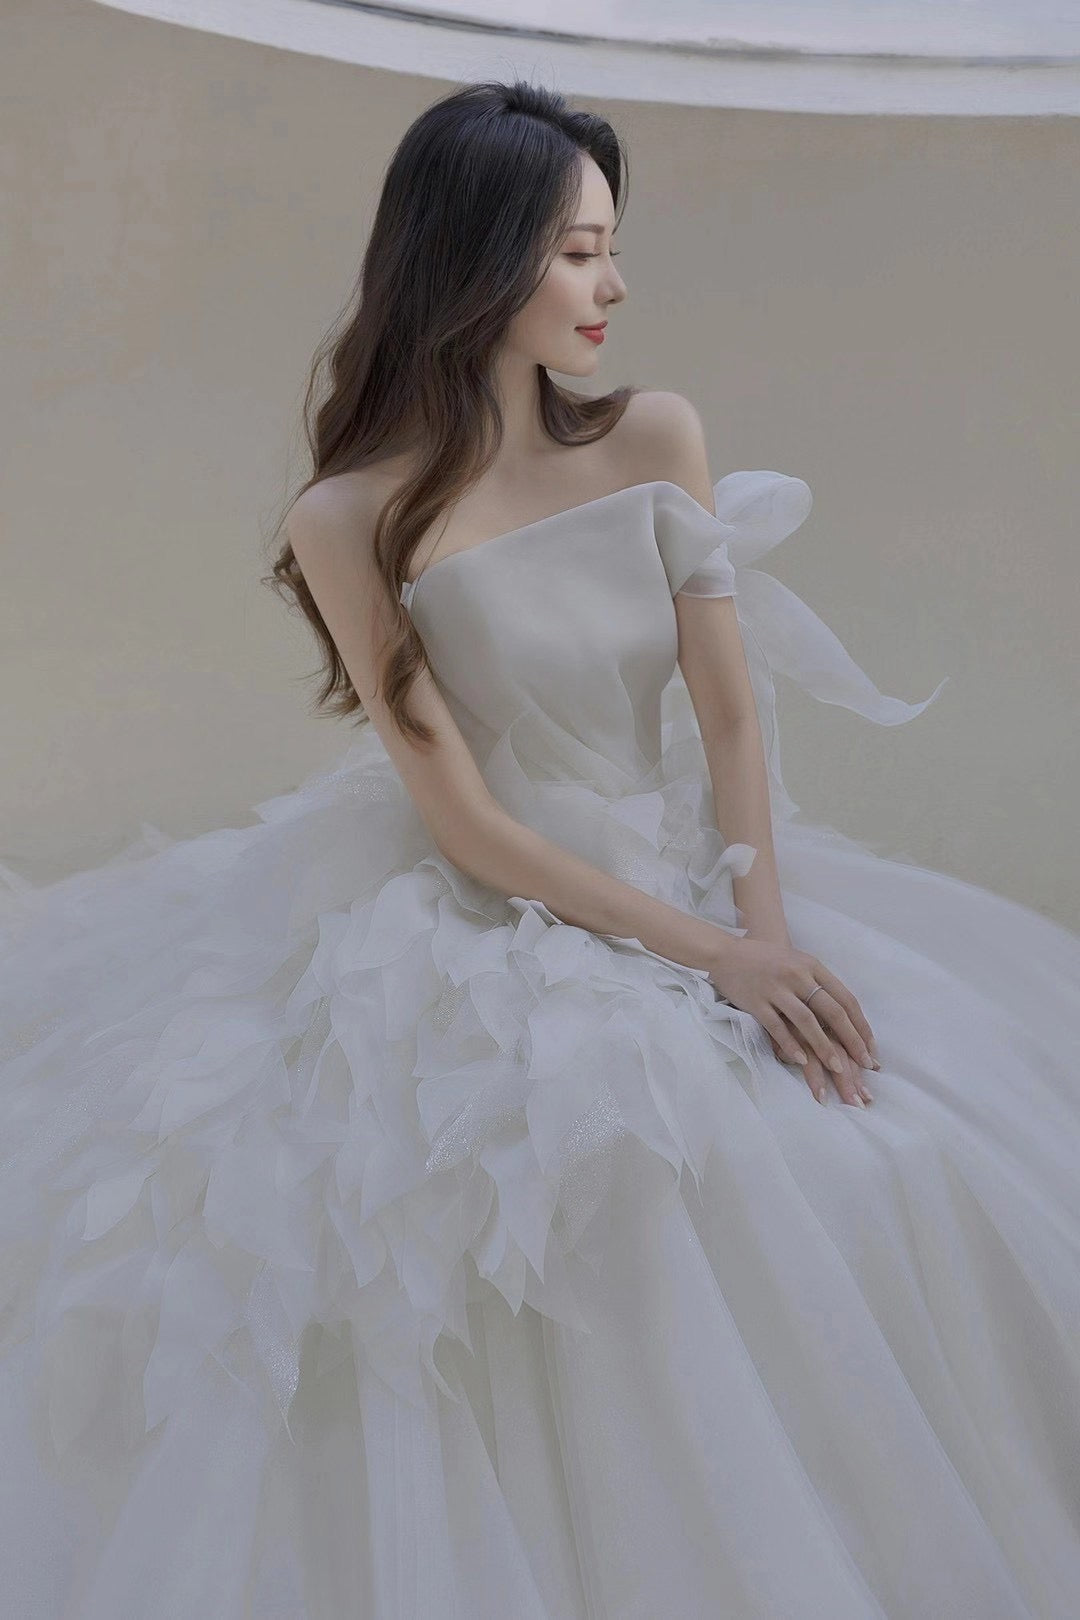 Elegant Newest Popular 2021 Bridal Gowns, High Quality A-line Wedding Dresses